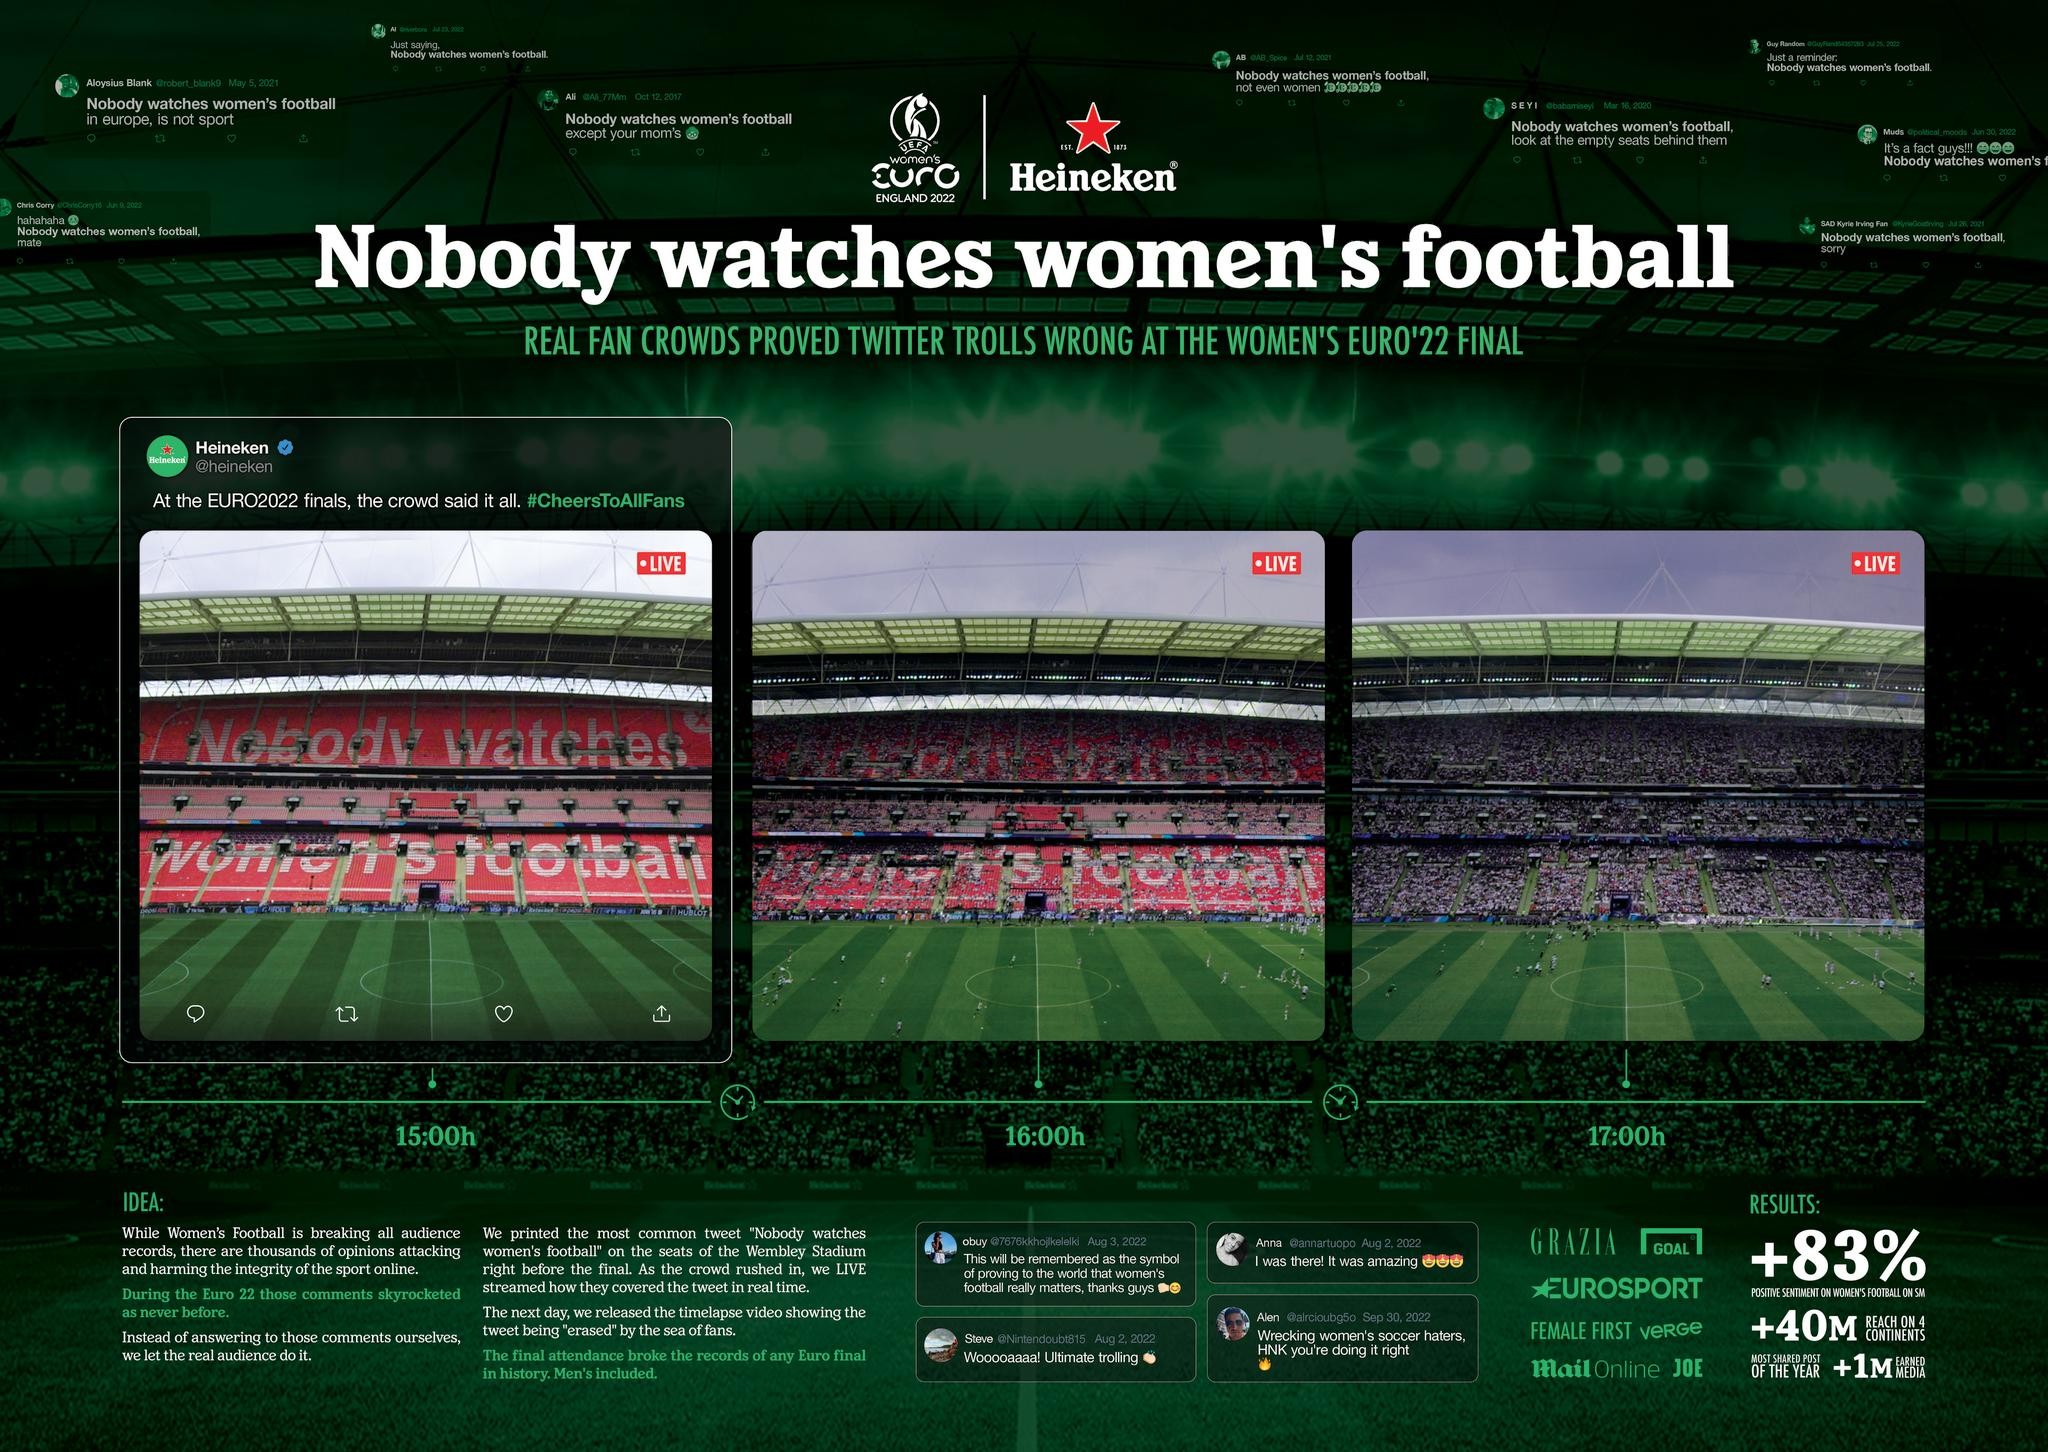 NOBODY WATCHES WOMEN'S FOOTBALL